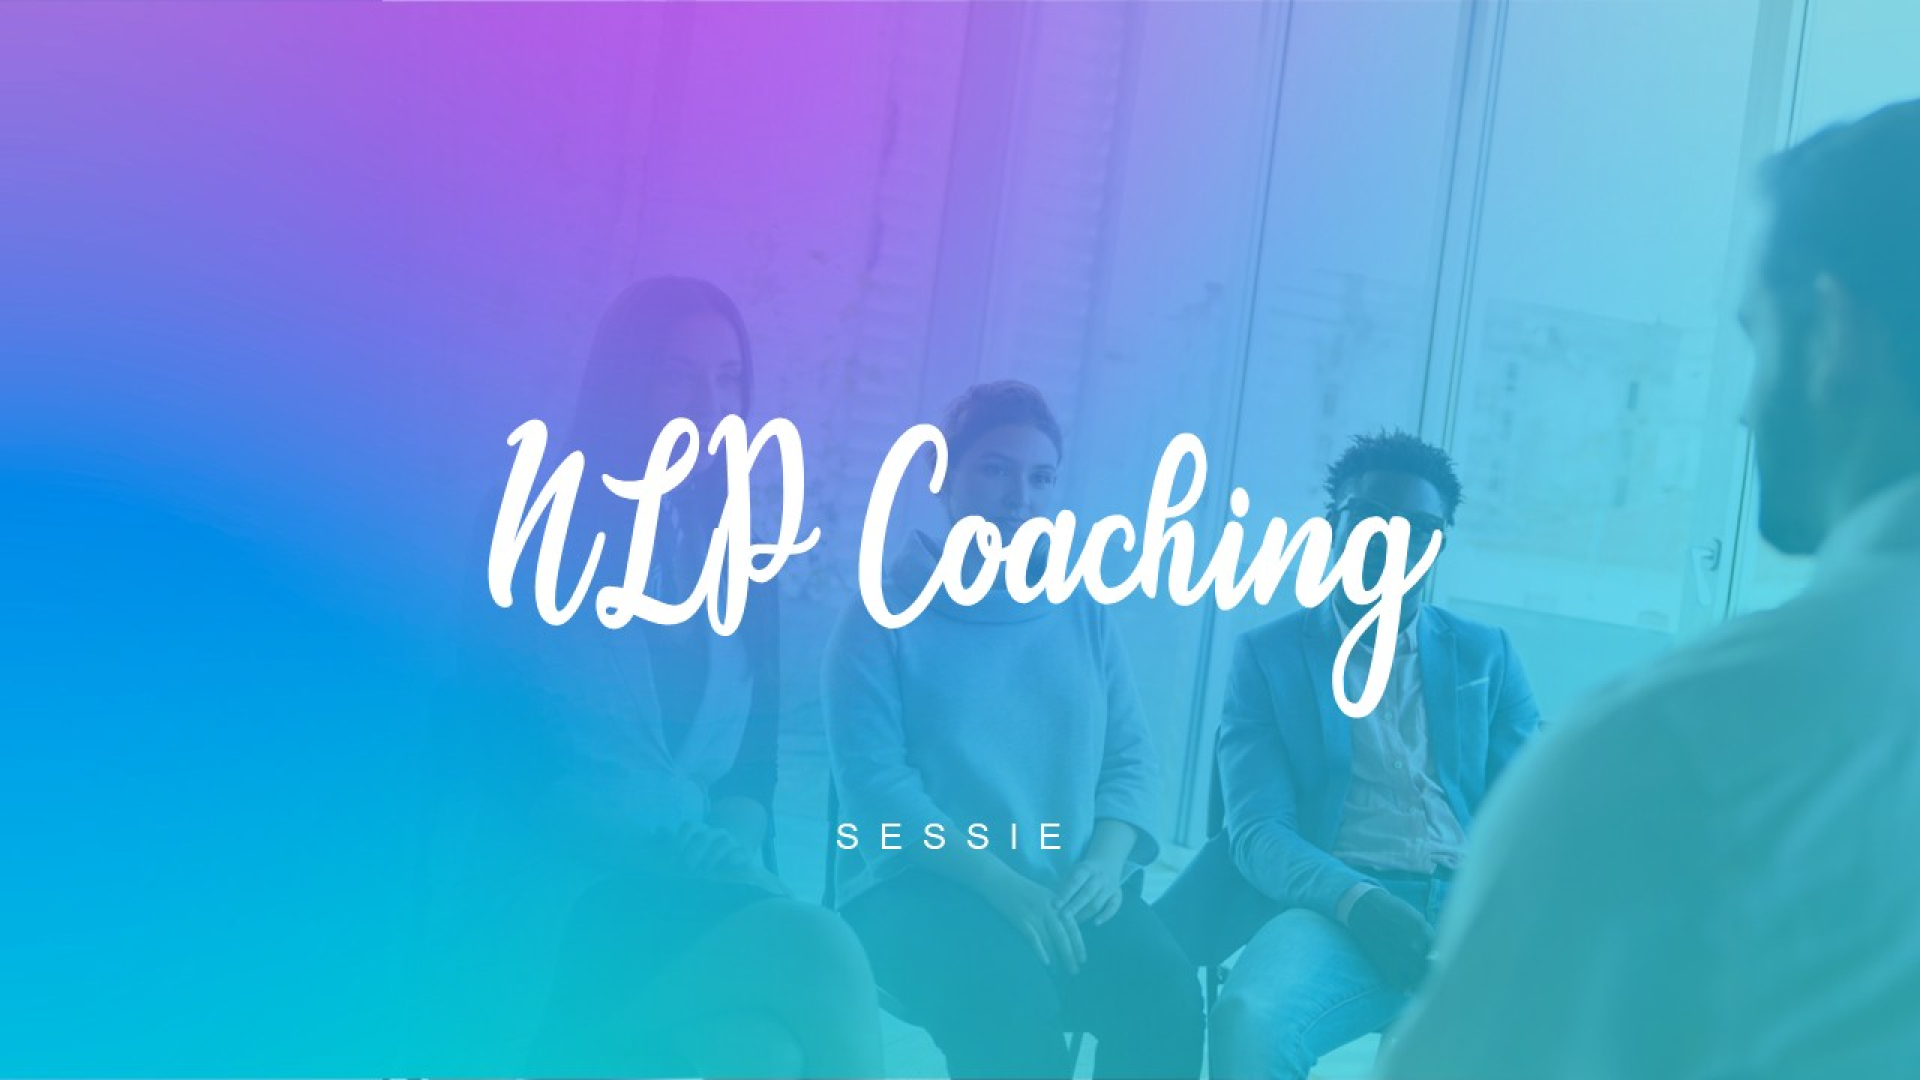 NLP coaching sessie